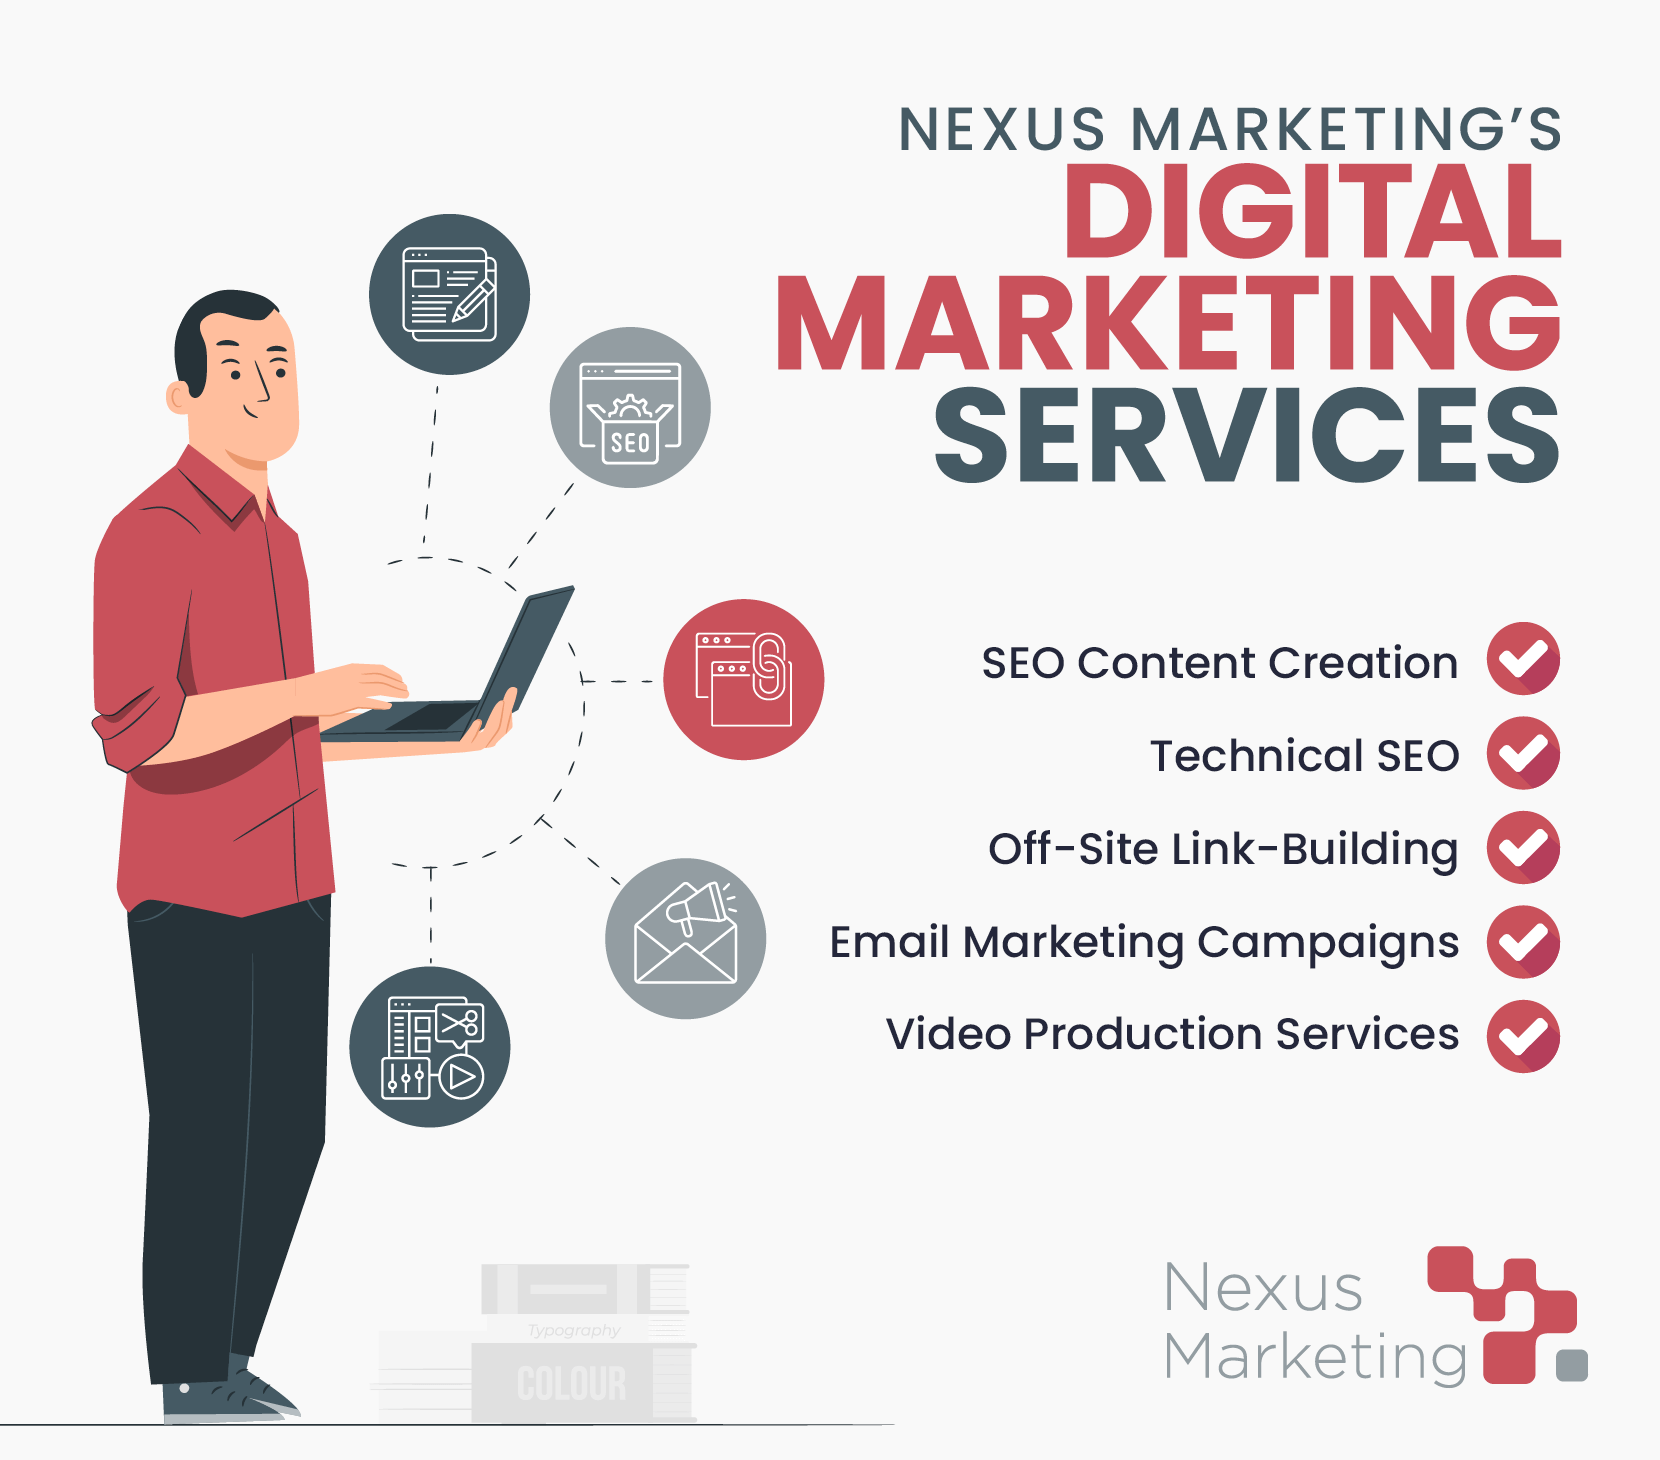 A list of Nexus Marketing’s nonprofit marketing services